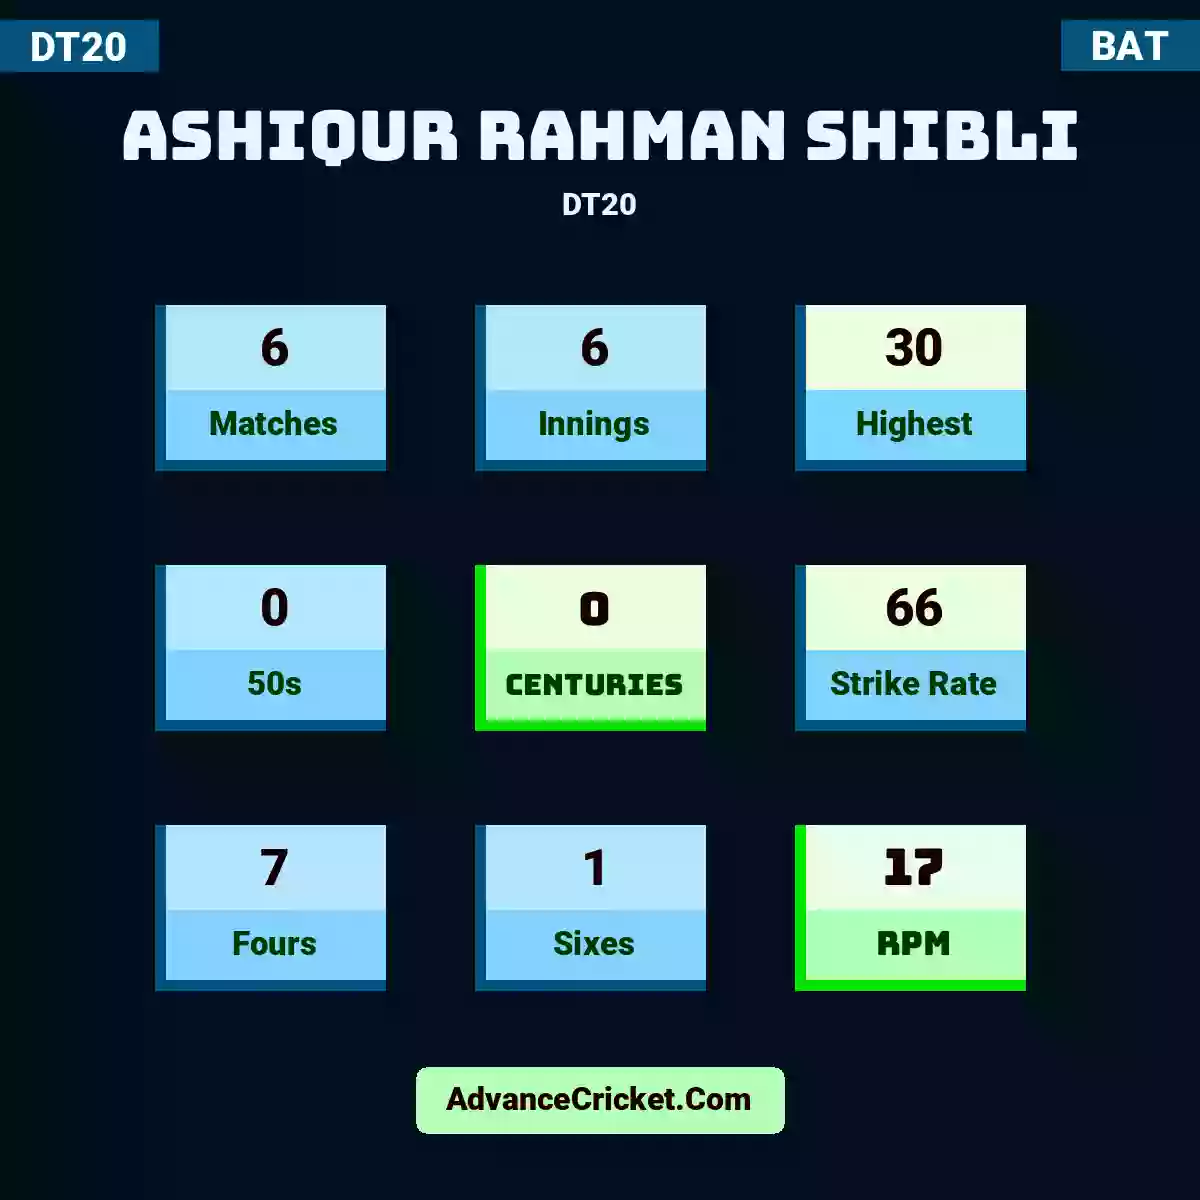 Ashiqur Rahman Shibli DT20 , Ashiqur Rahman Shibli played 6 matches, scored 30 runs as highest, 0 half-centuries, and 0 centuries, with a strike rate of 66. A.Rahman.Shibli hit 7 fours and 1 sixes, with an RPM of 17.